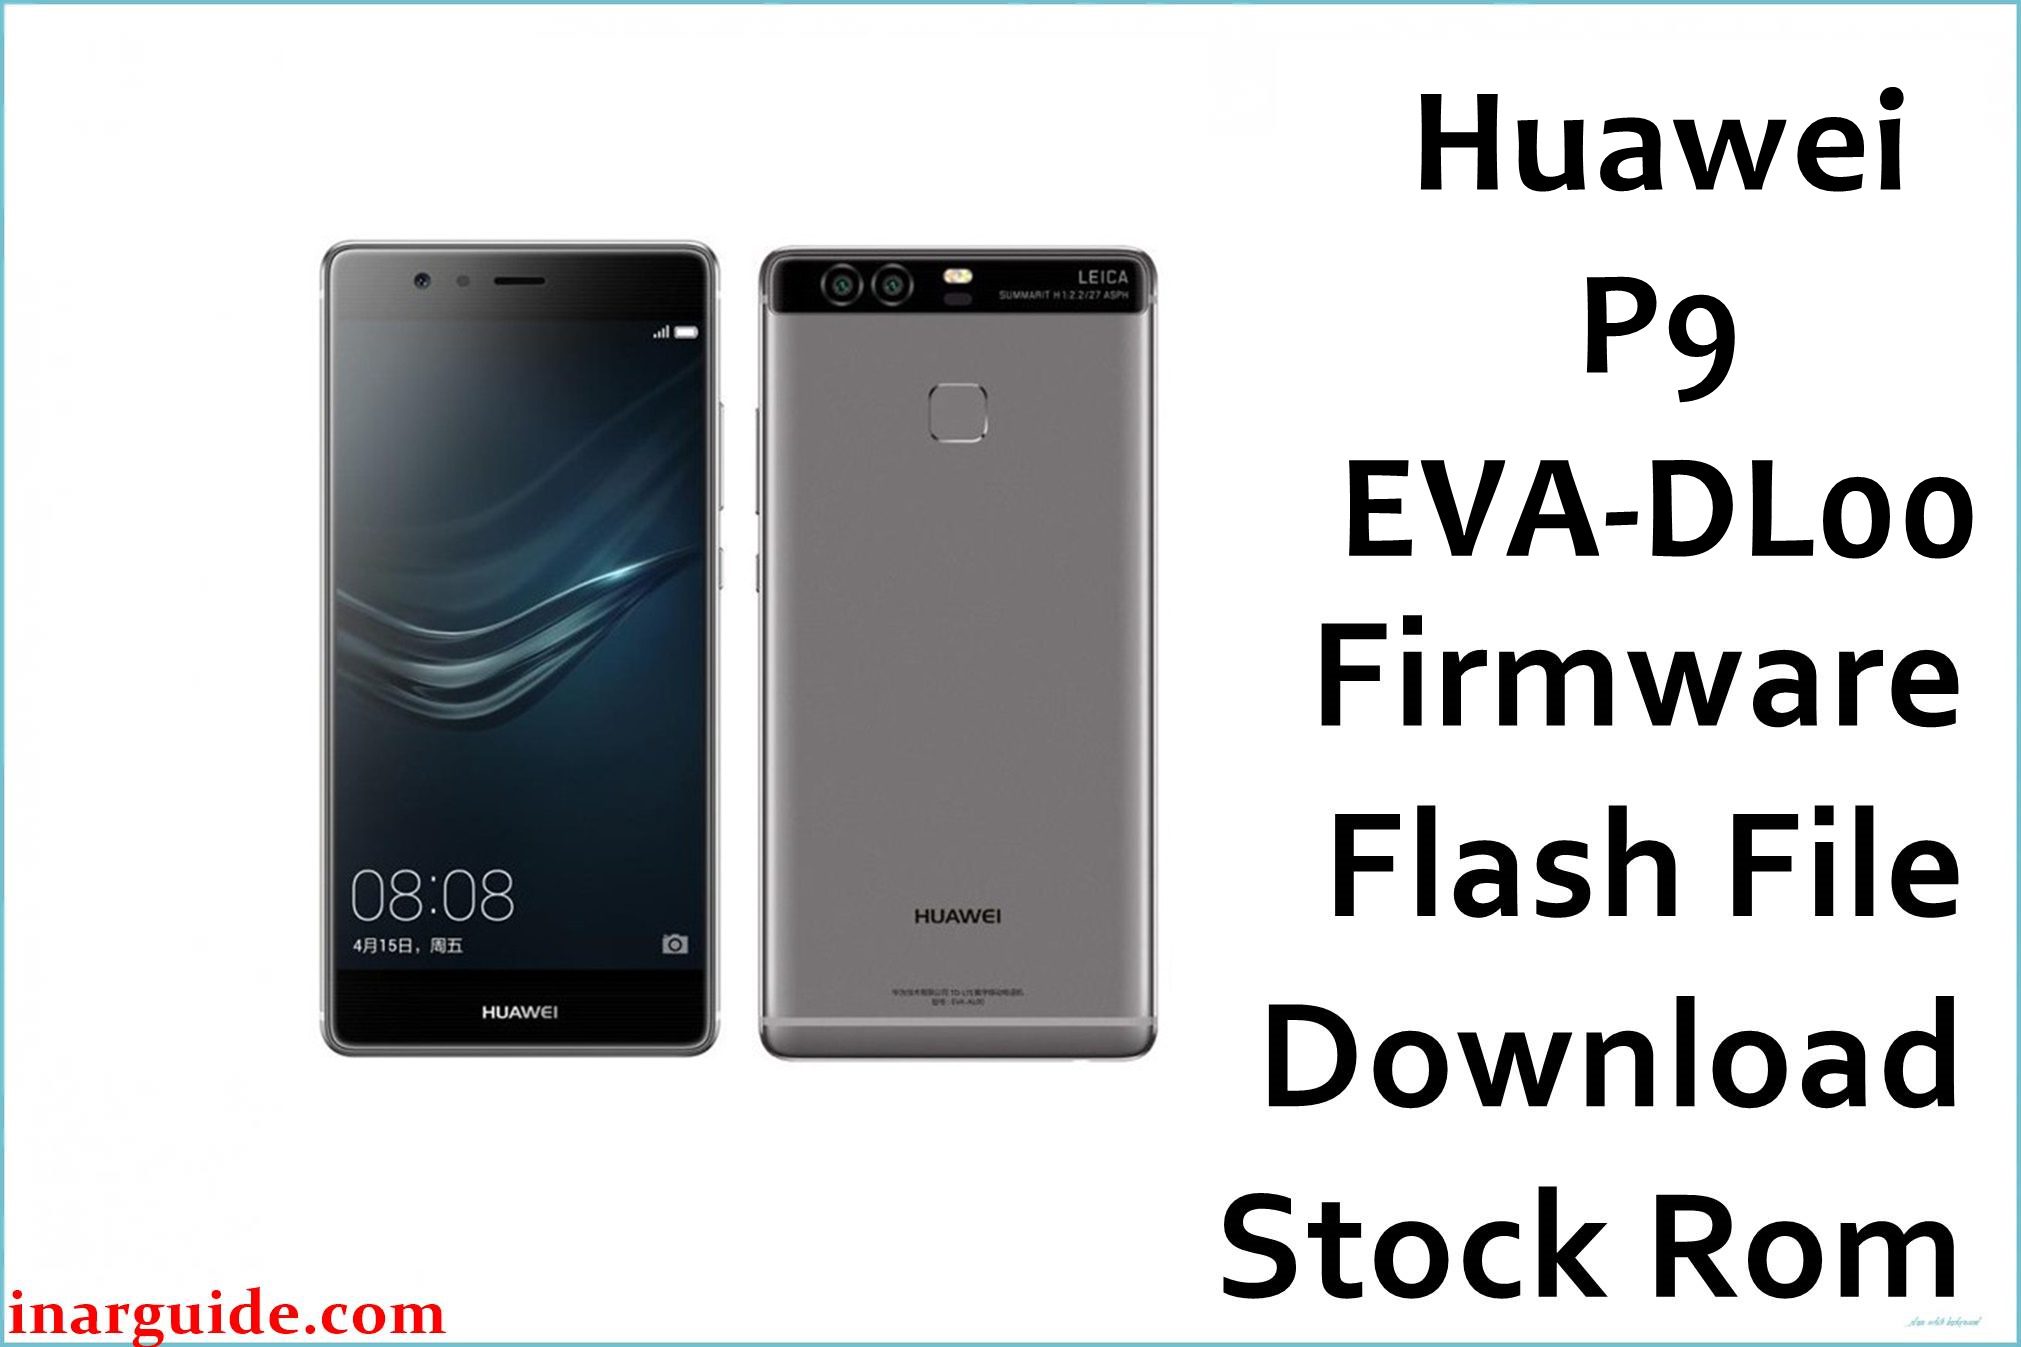 Huawei P9 EVA DL00